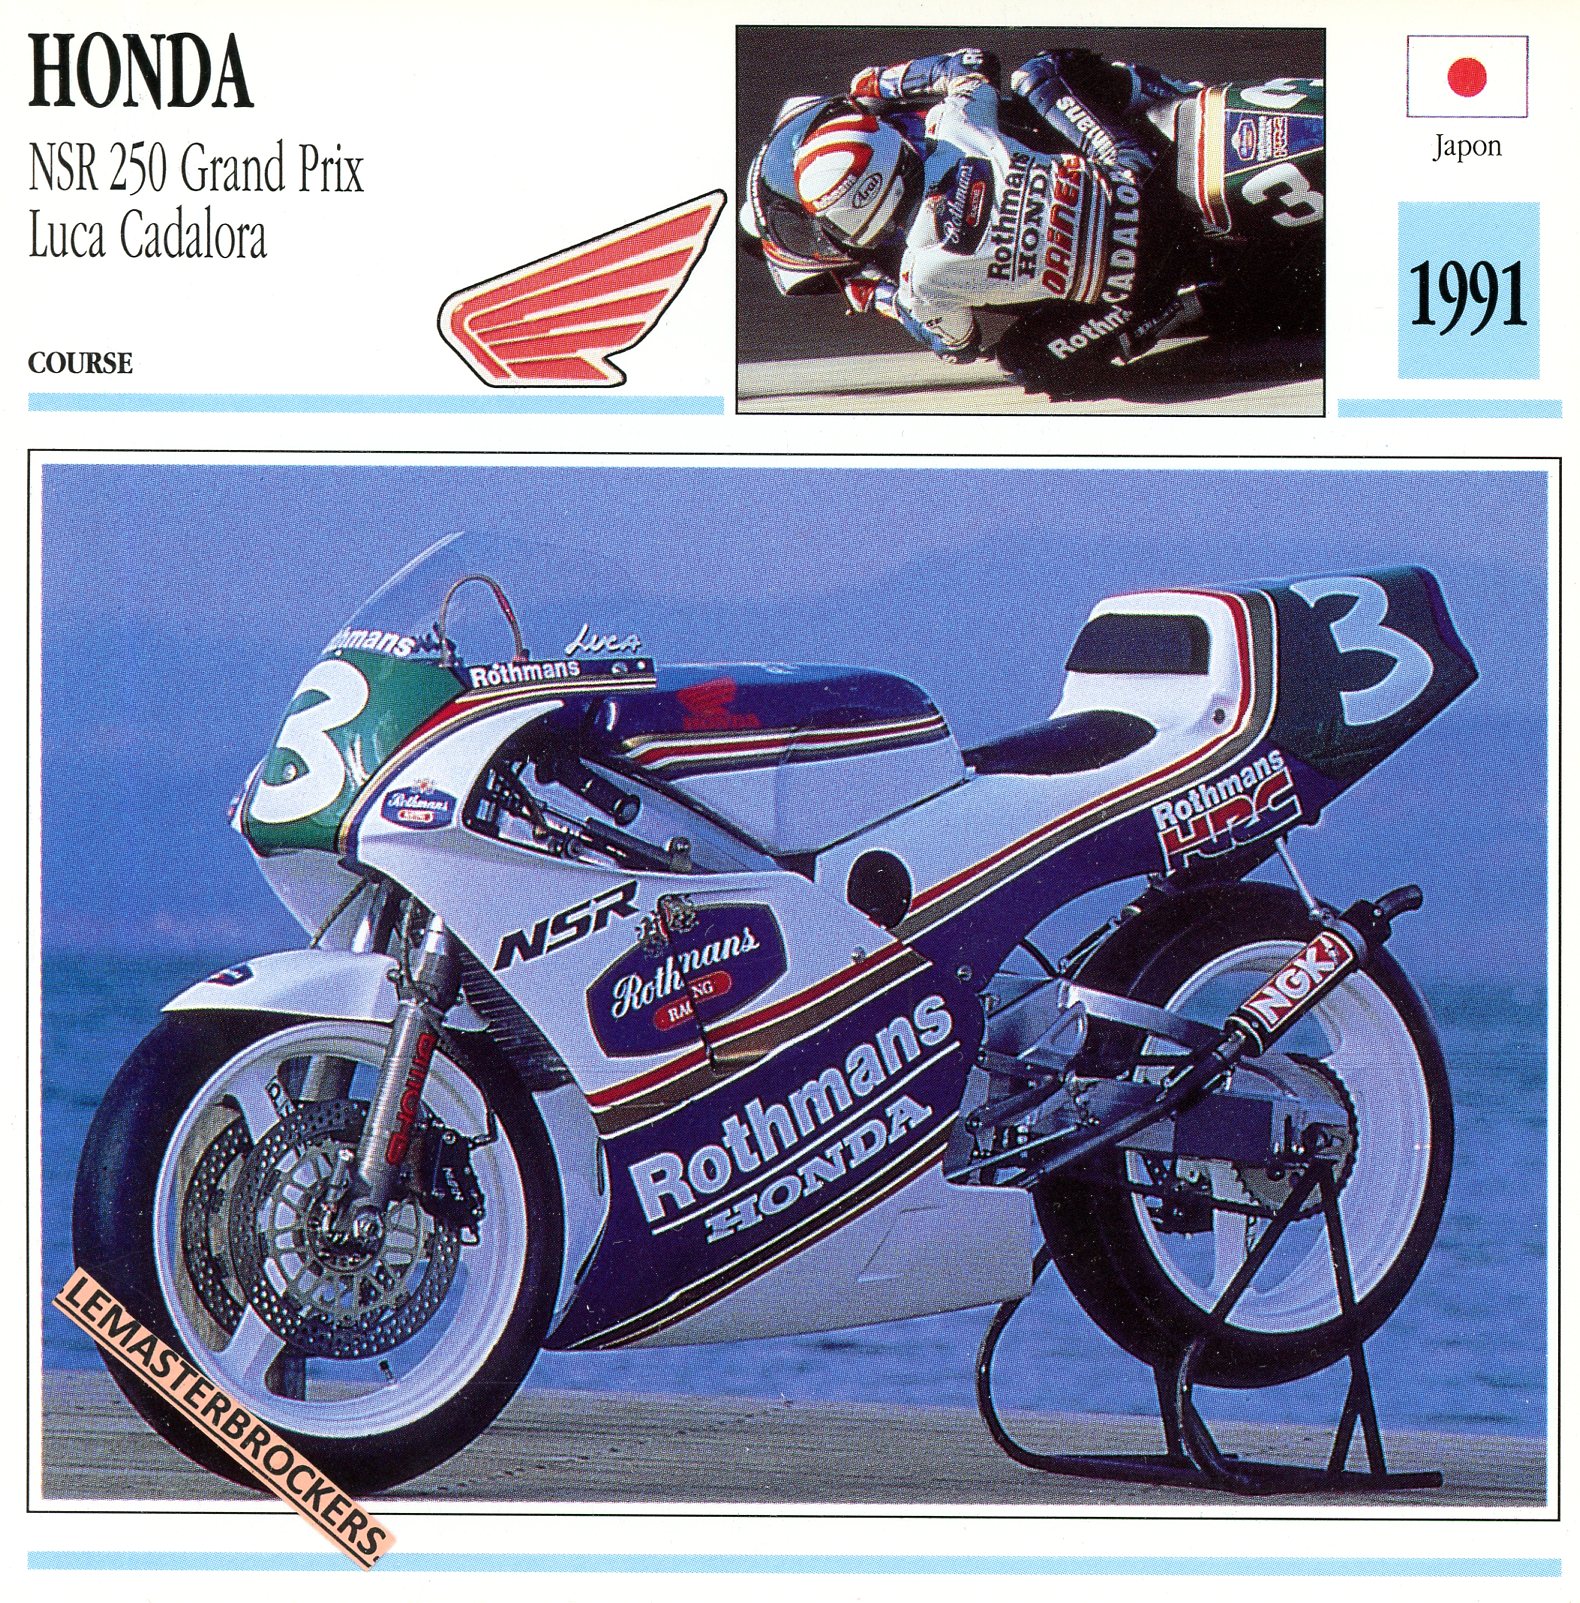 FICHE-MOTO-HONDA-NSR250-LUCA-CADALORA-LEMASTERBROCKERS-CARS-MOTORCYCLE